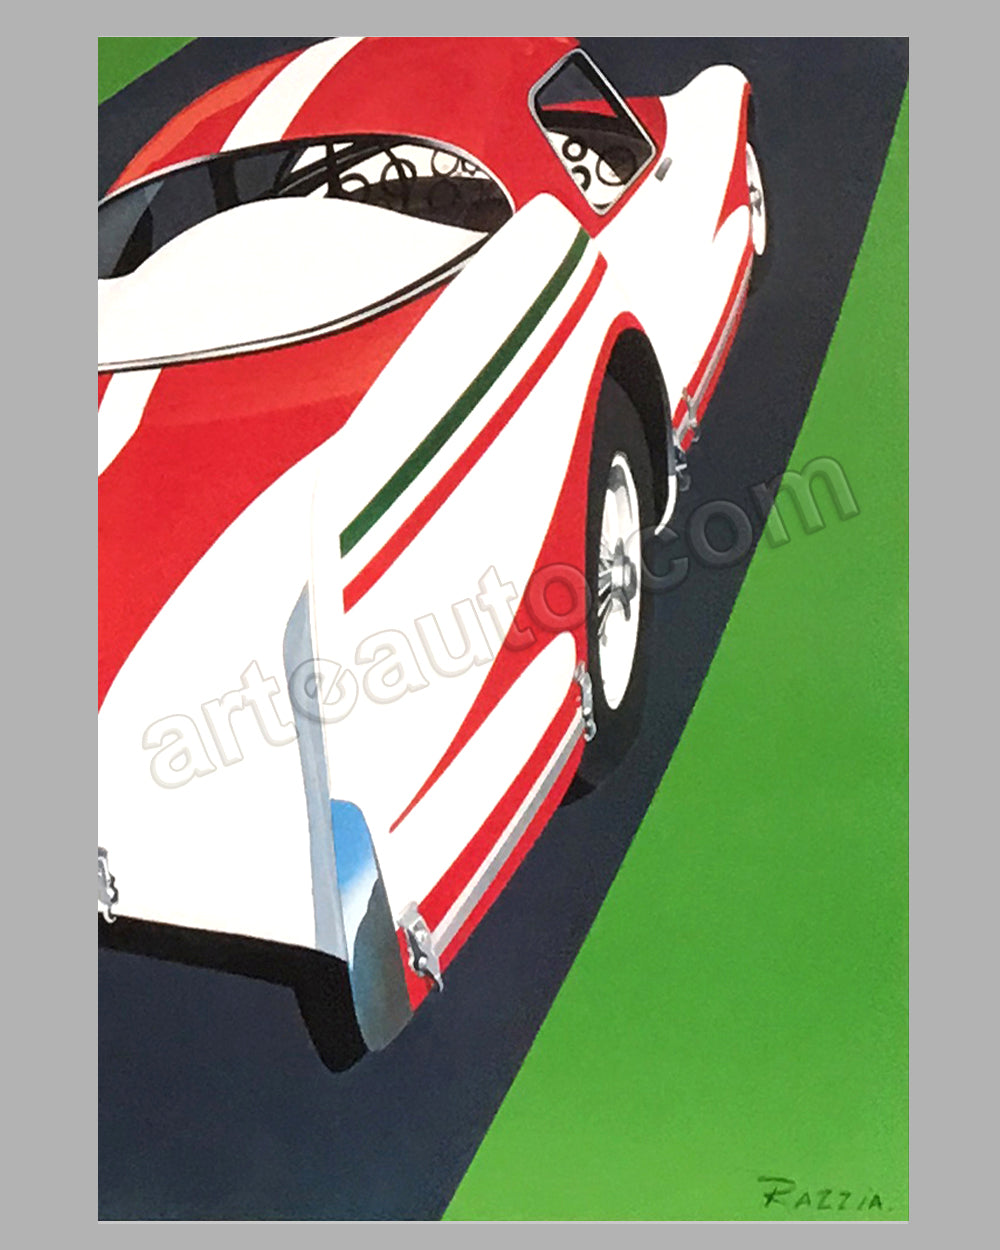 Louis Vuitton Concourse Bagatelle 1997 Ferrari Race Art Print Poster 17in x  22in